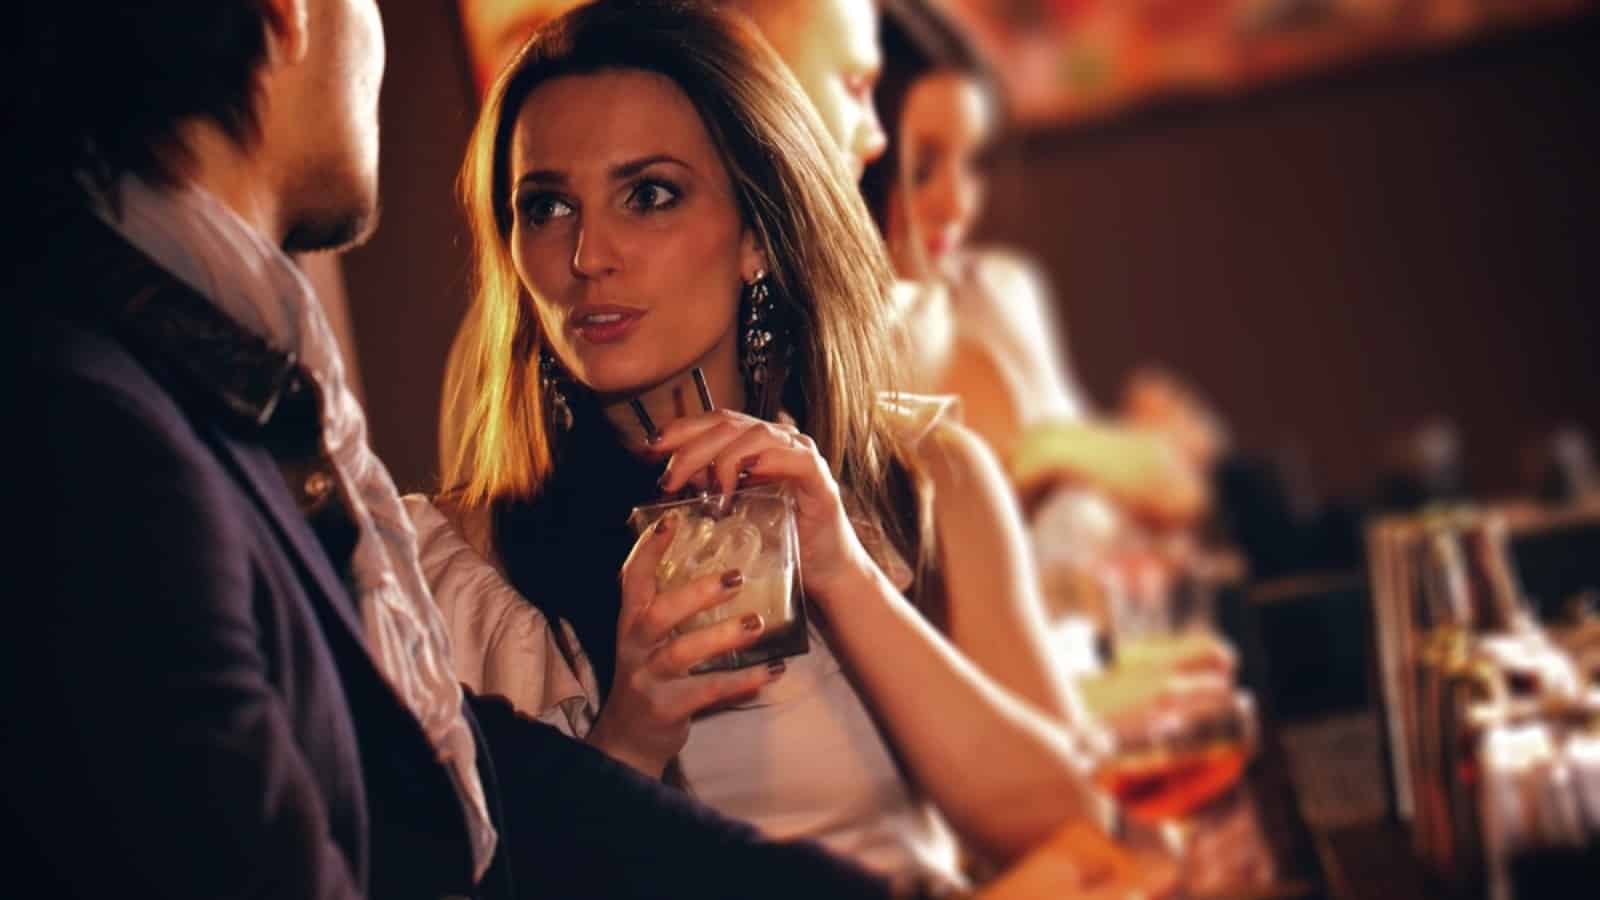 Woman drinking wine in Bar